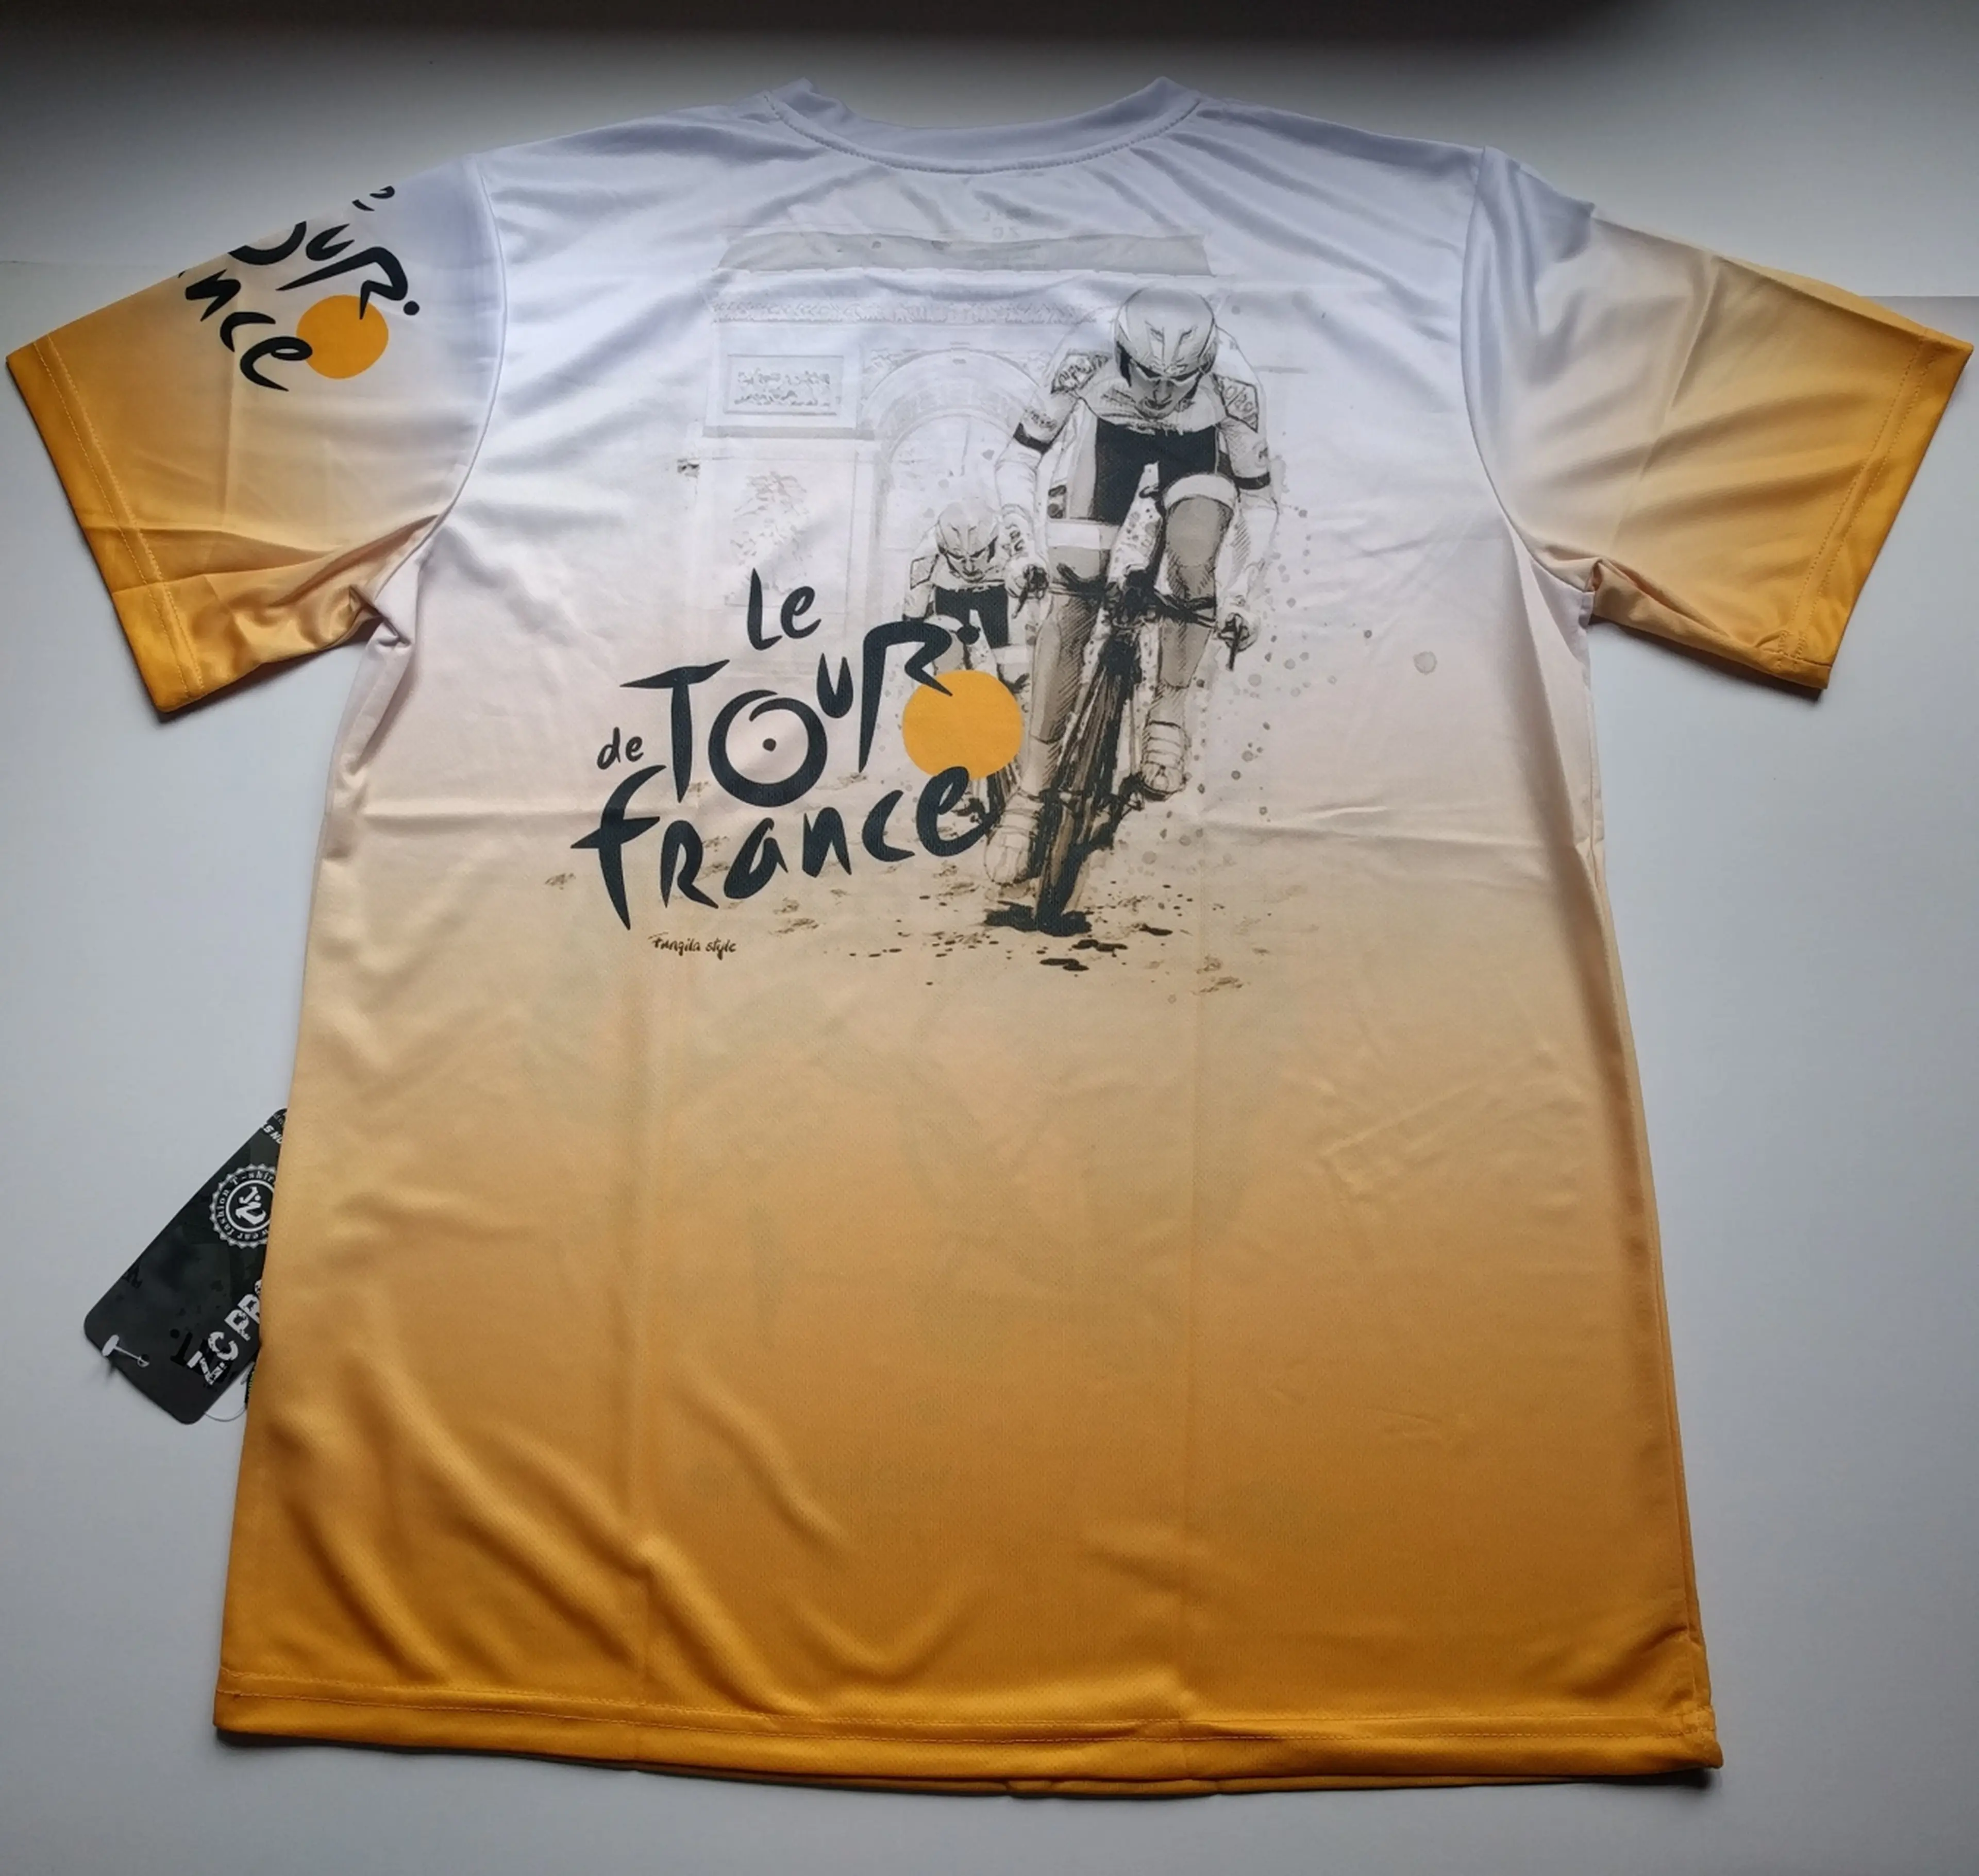 2. Tricou Tour de France t8 replica